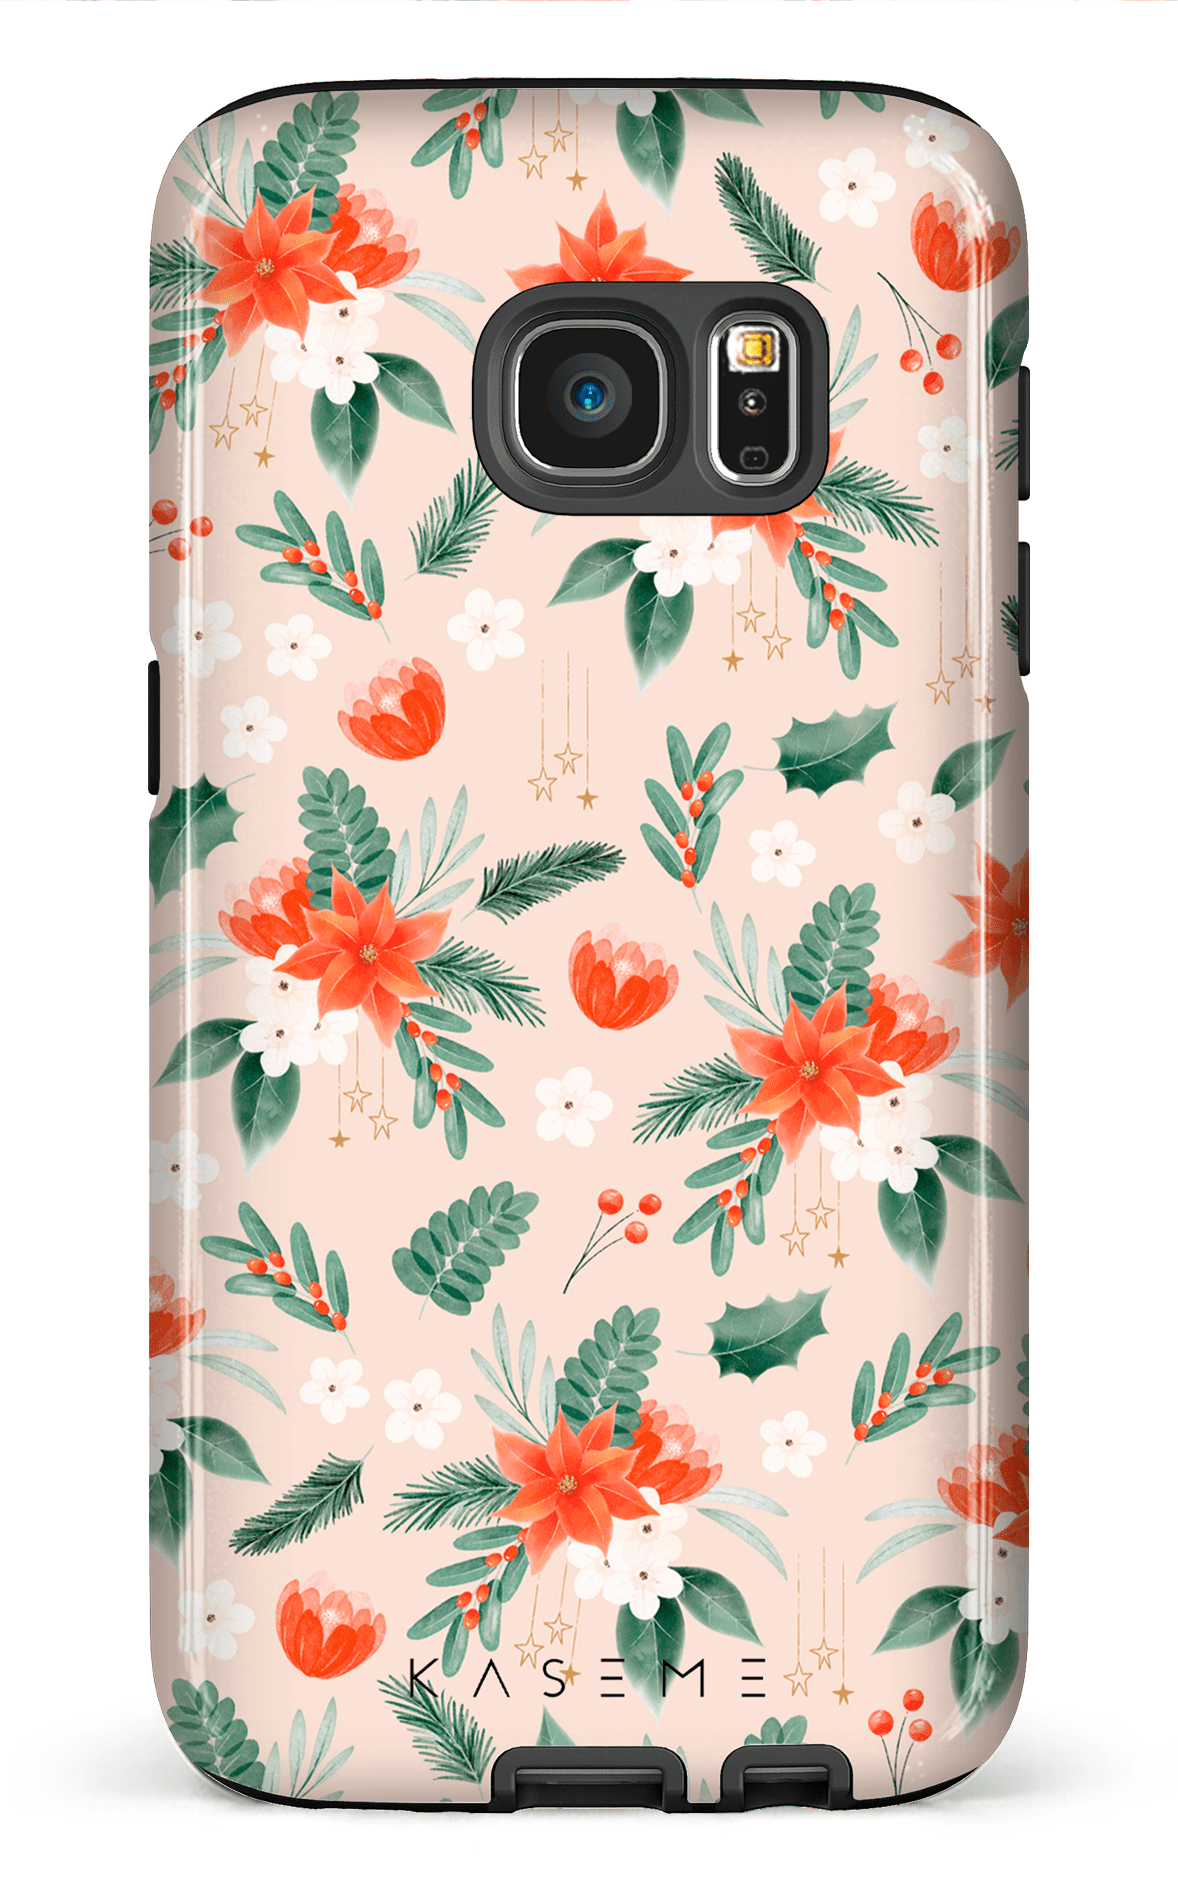 Poinsettia Beige - Galaxy S7